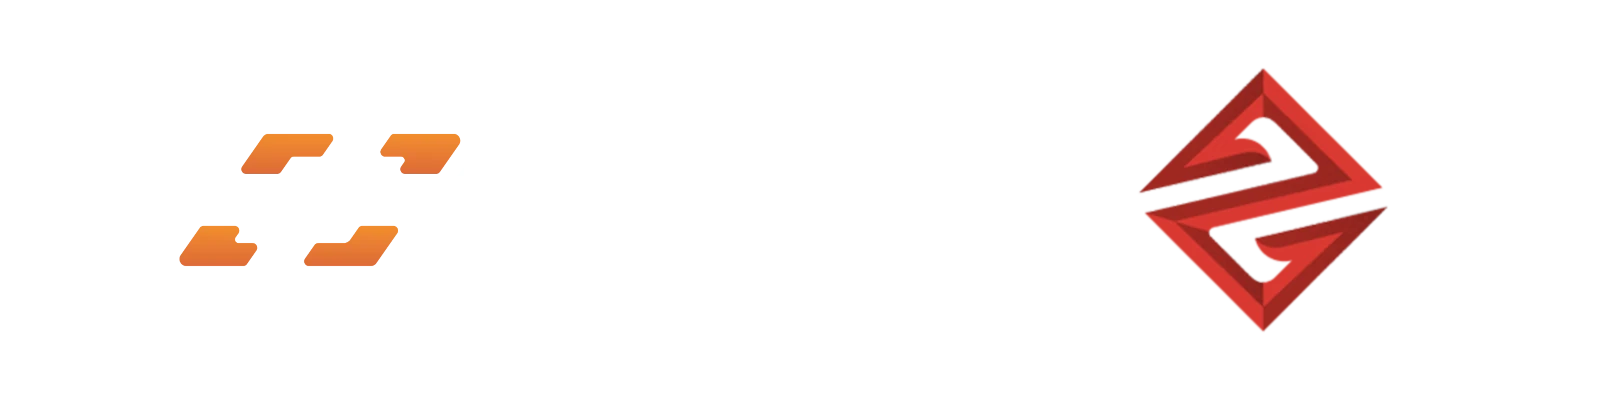 BoomTV and AVGL logos